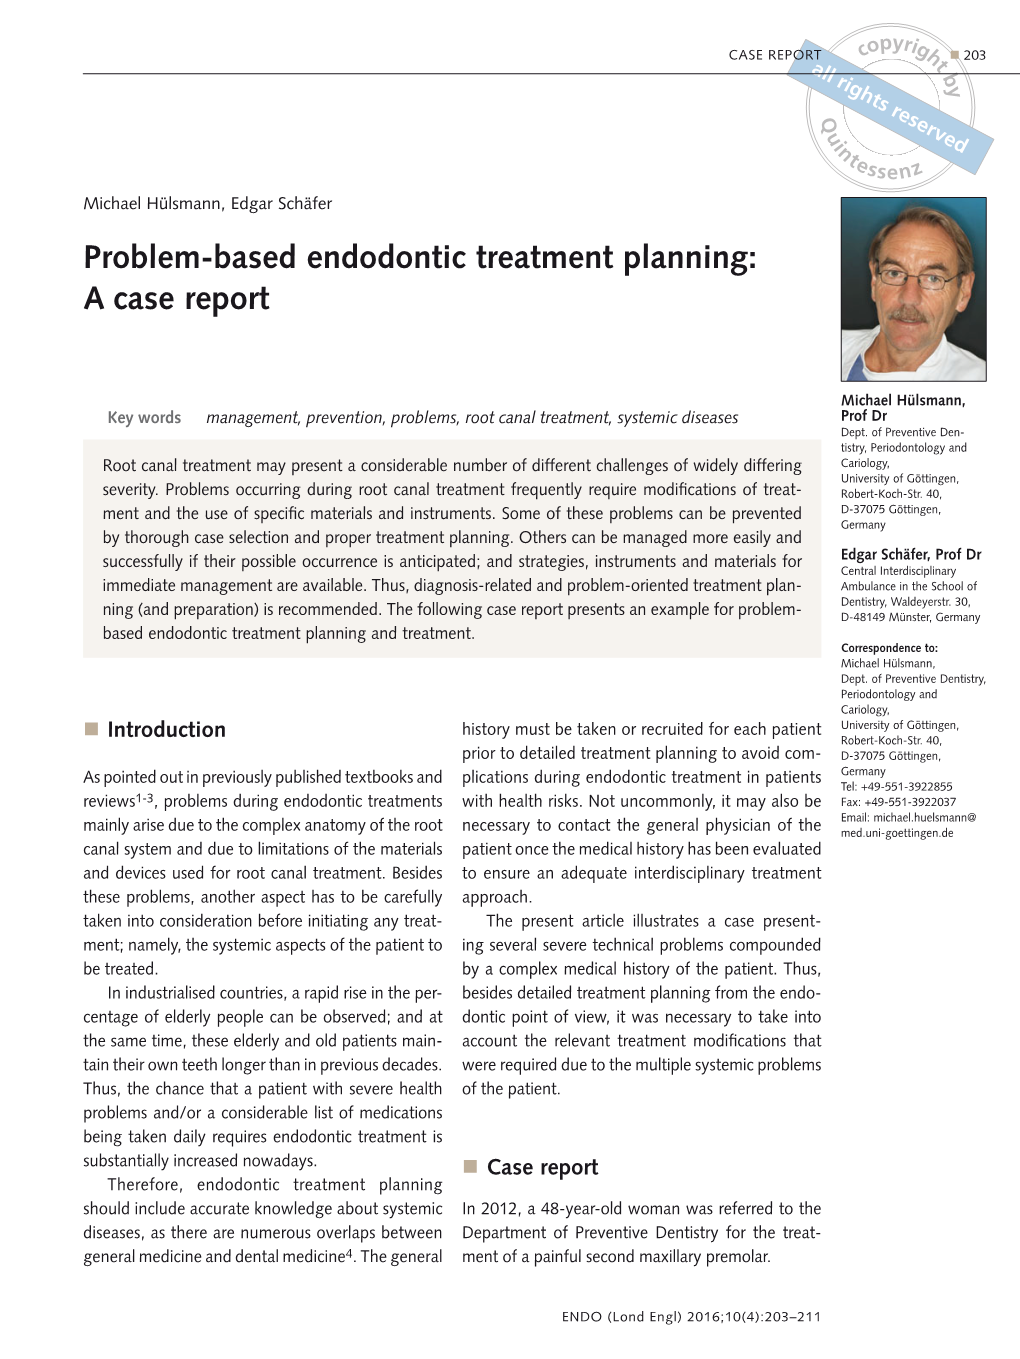 Problem-Based Endodontic Treatment Planning: a Case Report